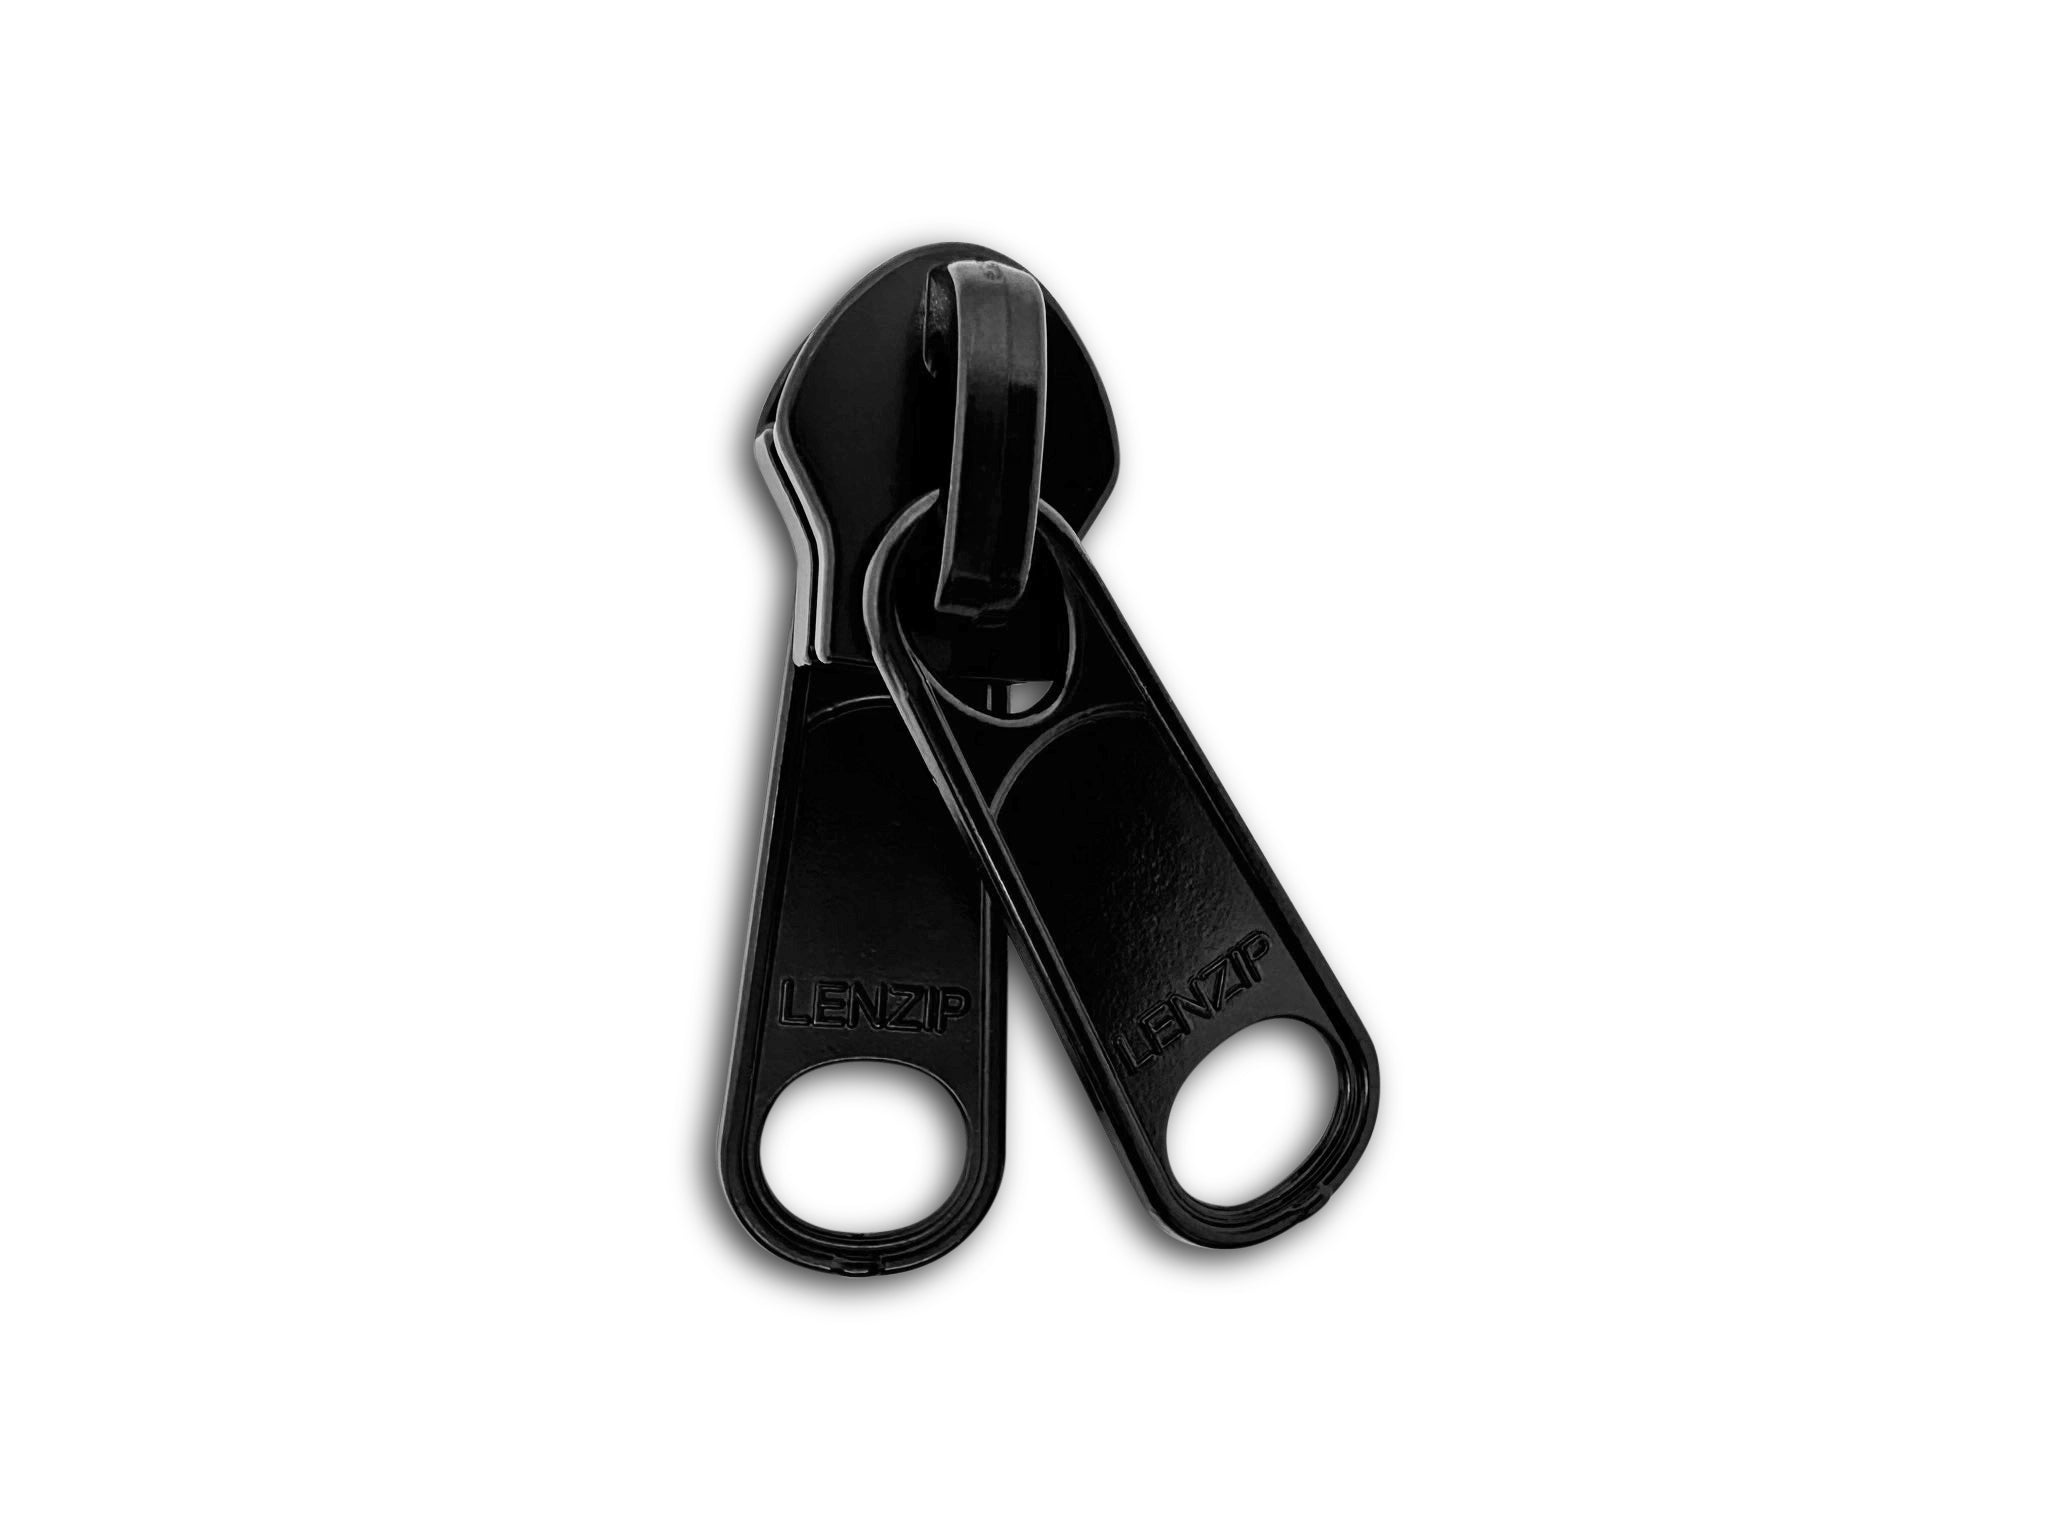 7 Non-lock Two Handle Double Pull Slider For Nylon Coil Zipper